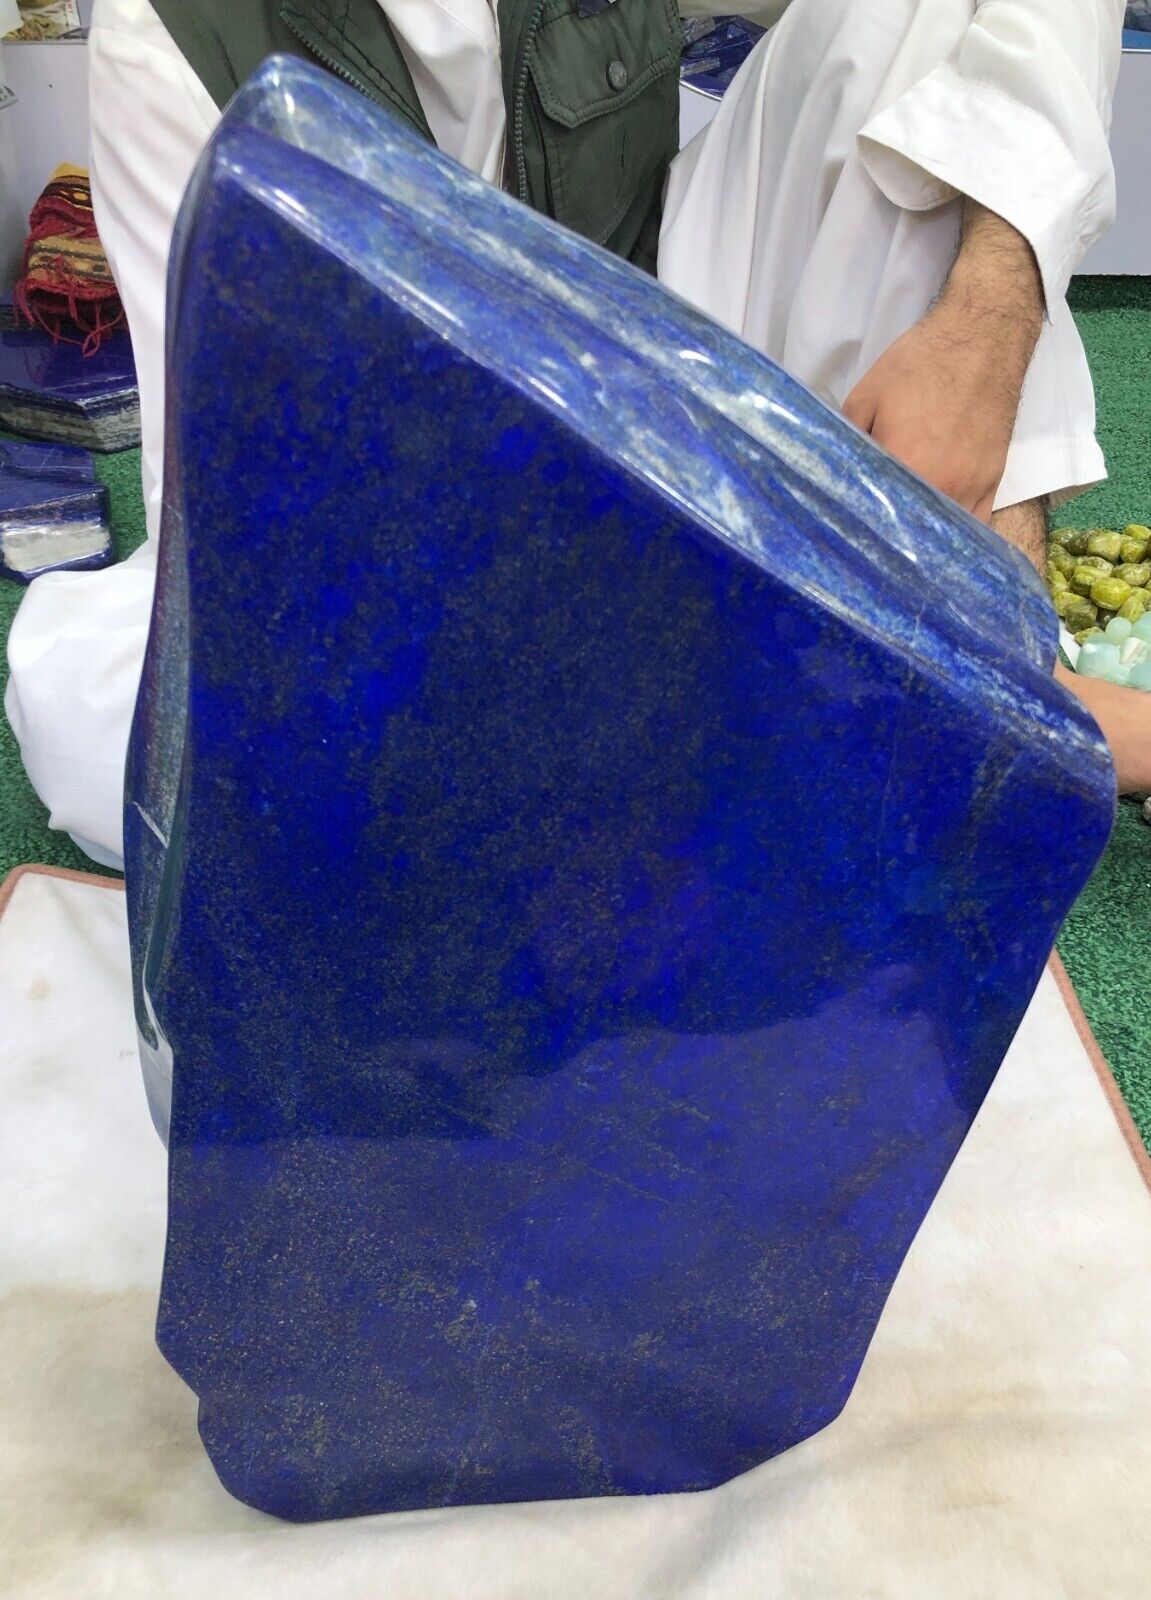 33 Kg Huge Lapis Lazuli A+ Grade Freeform Polished Tumbled Stone Afghanistan